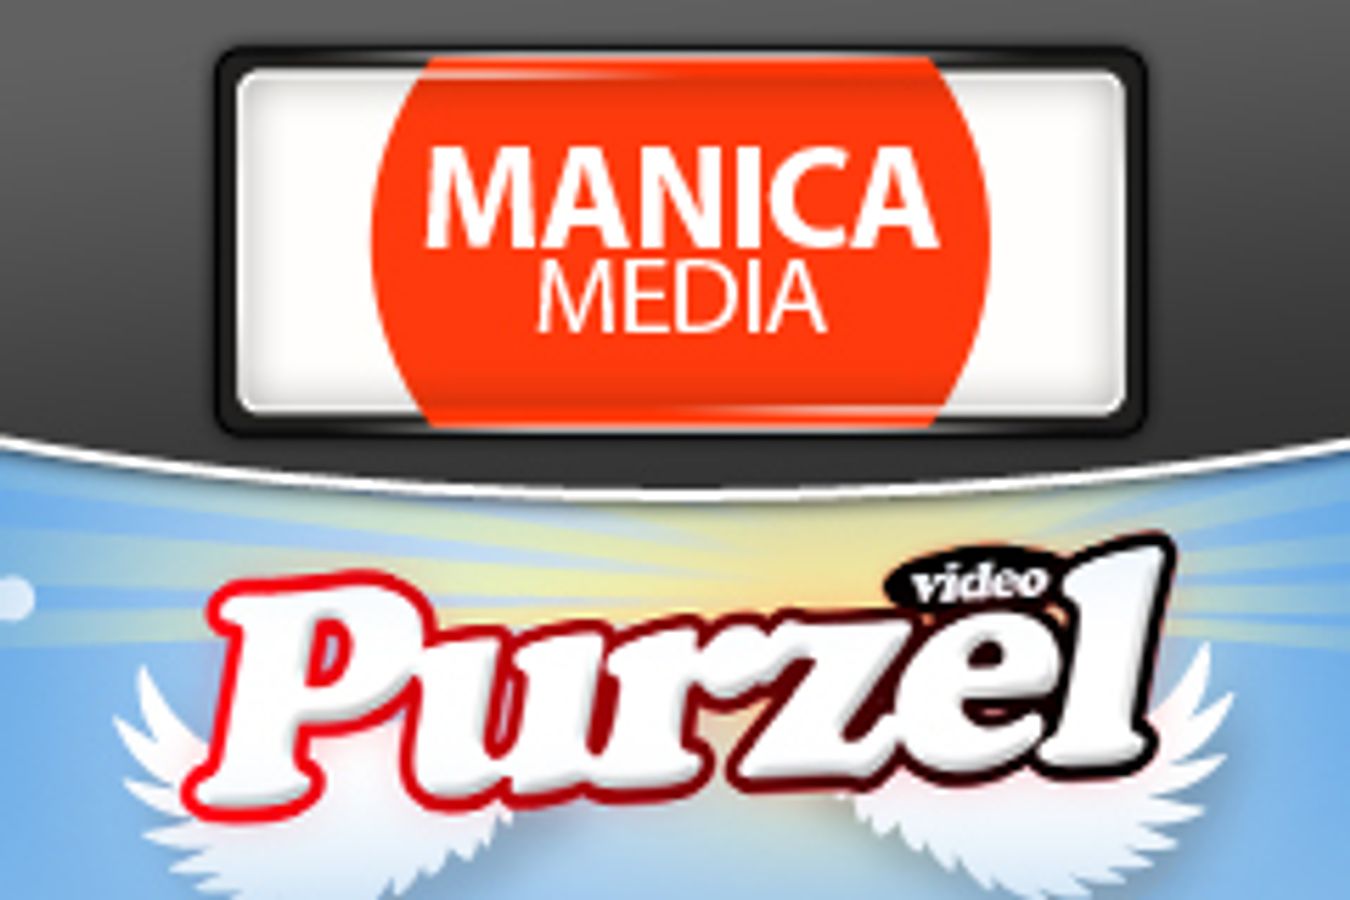 Manica Media - Purzel Videos